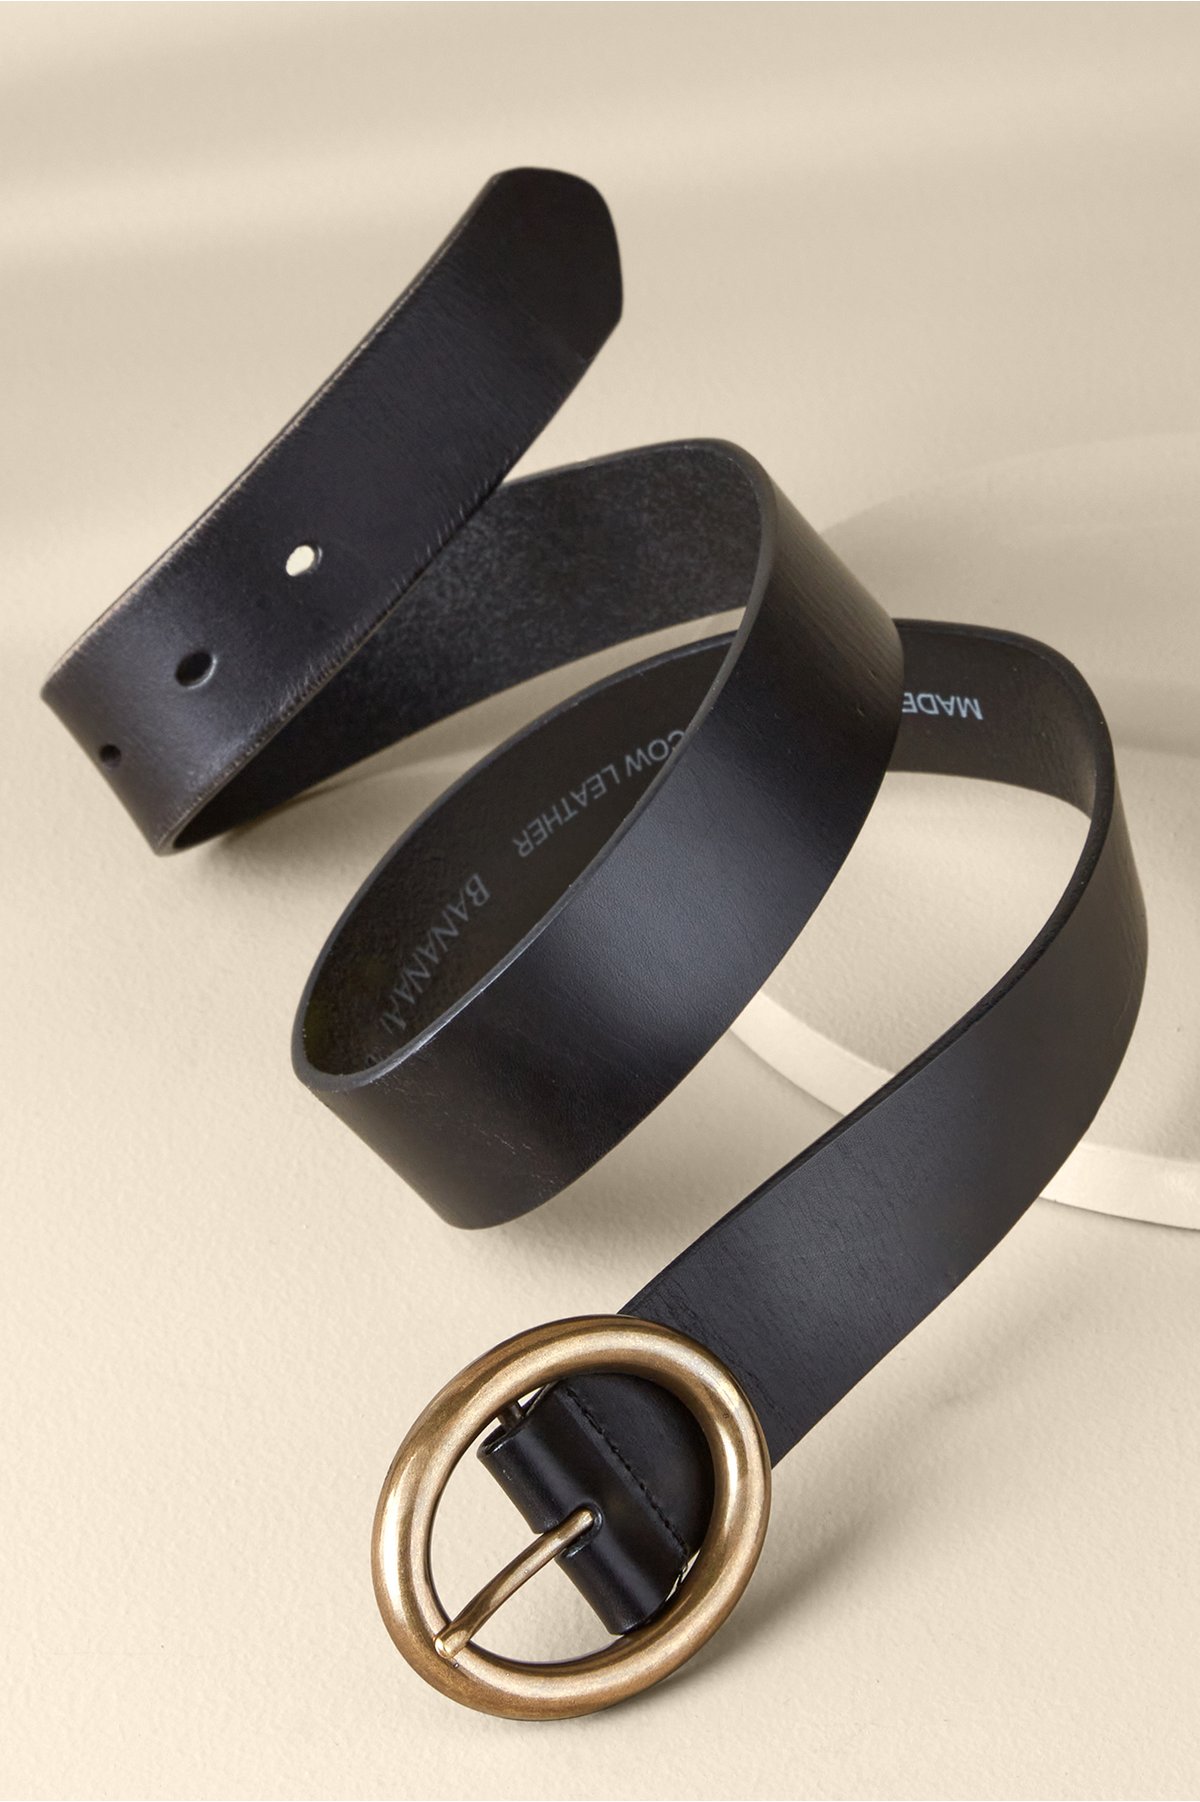 Monaco Leather Belt by Soft Surroundings, in Black size L (14/16)